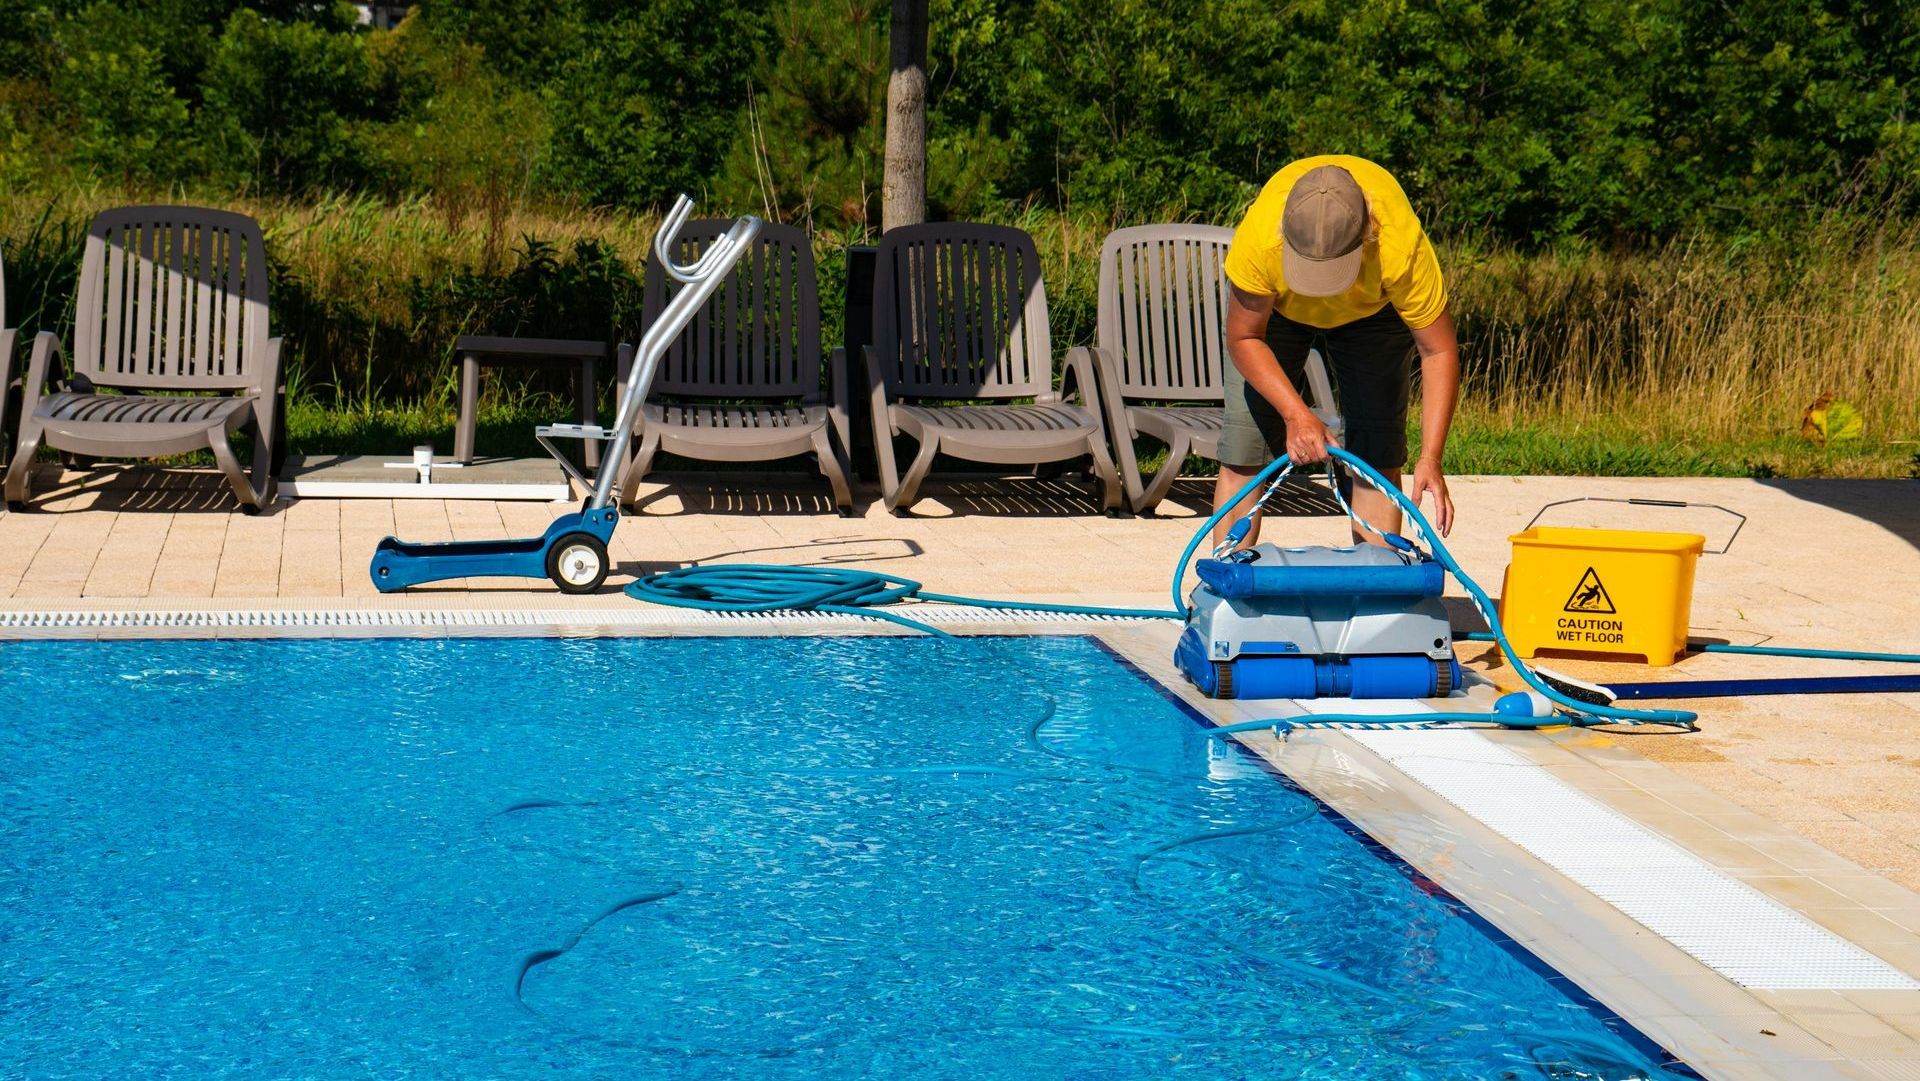 Pool maintenance. Pool vacuum robotic cleaning.